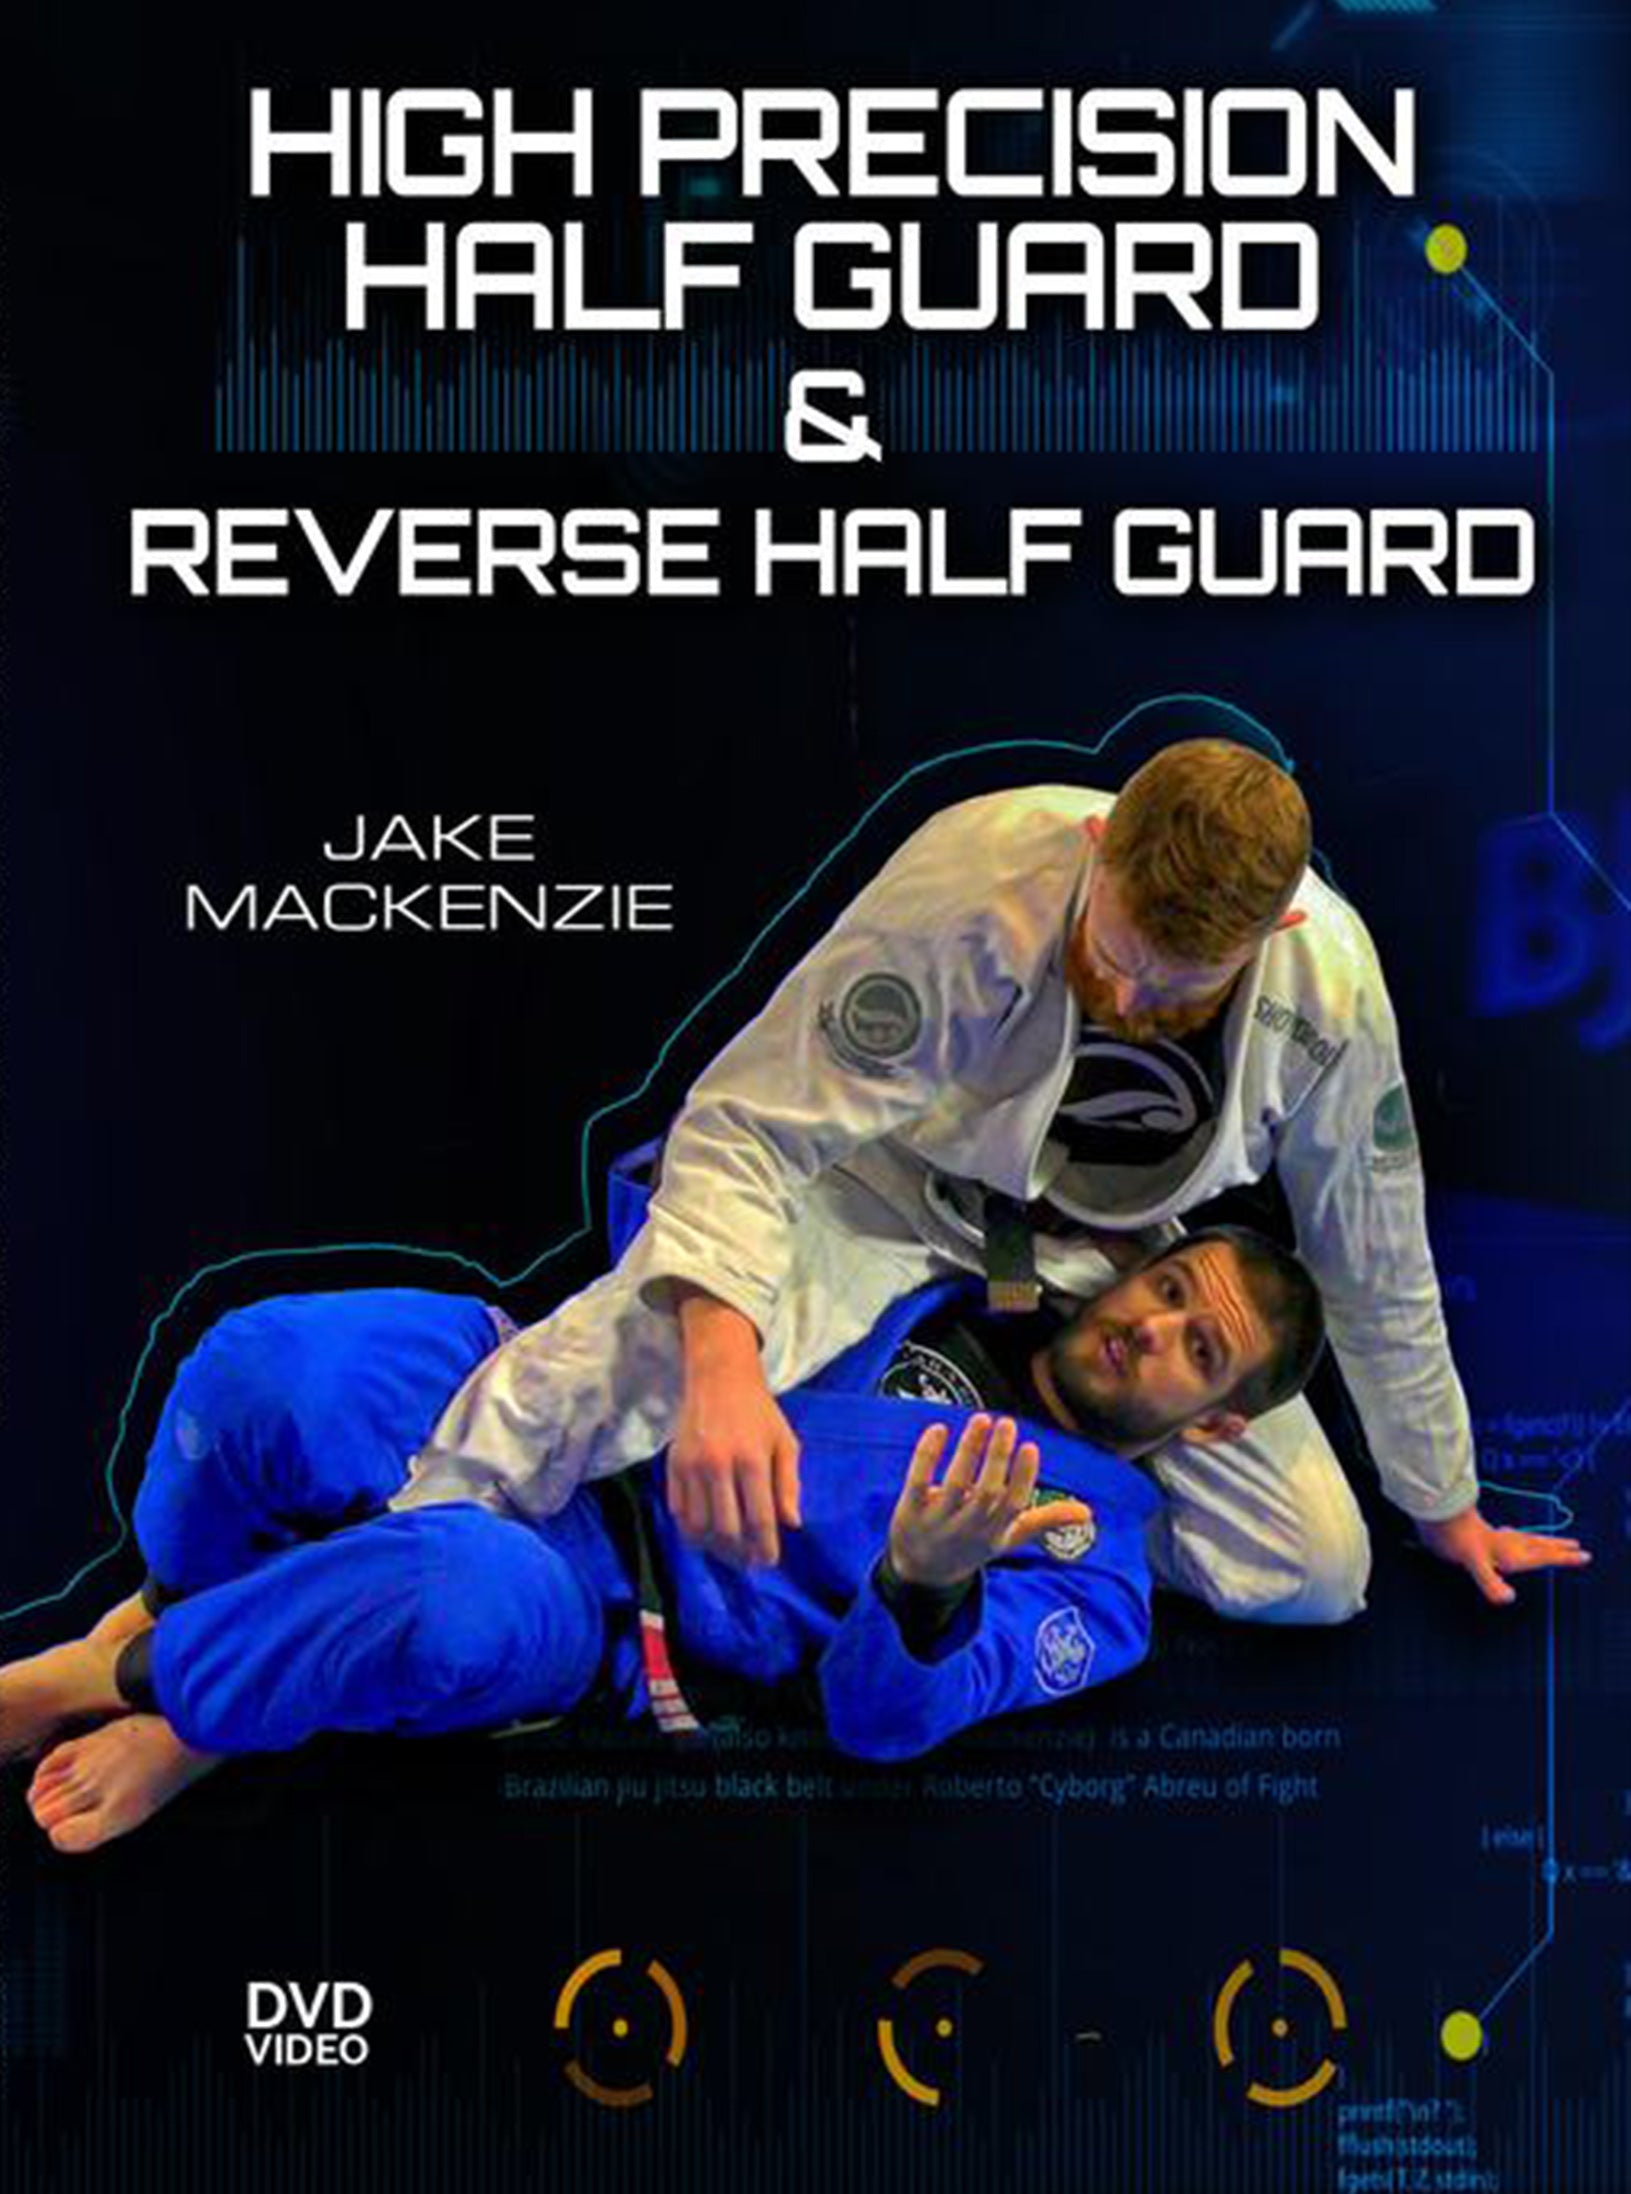 HIGH PRECISION HALF GUARD AND REVERSE HALF GUARD BY JAKE MACKENZIE DVD